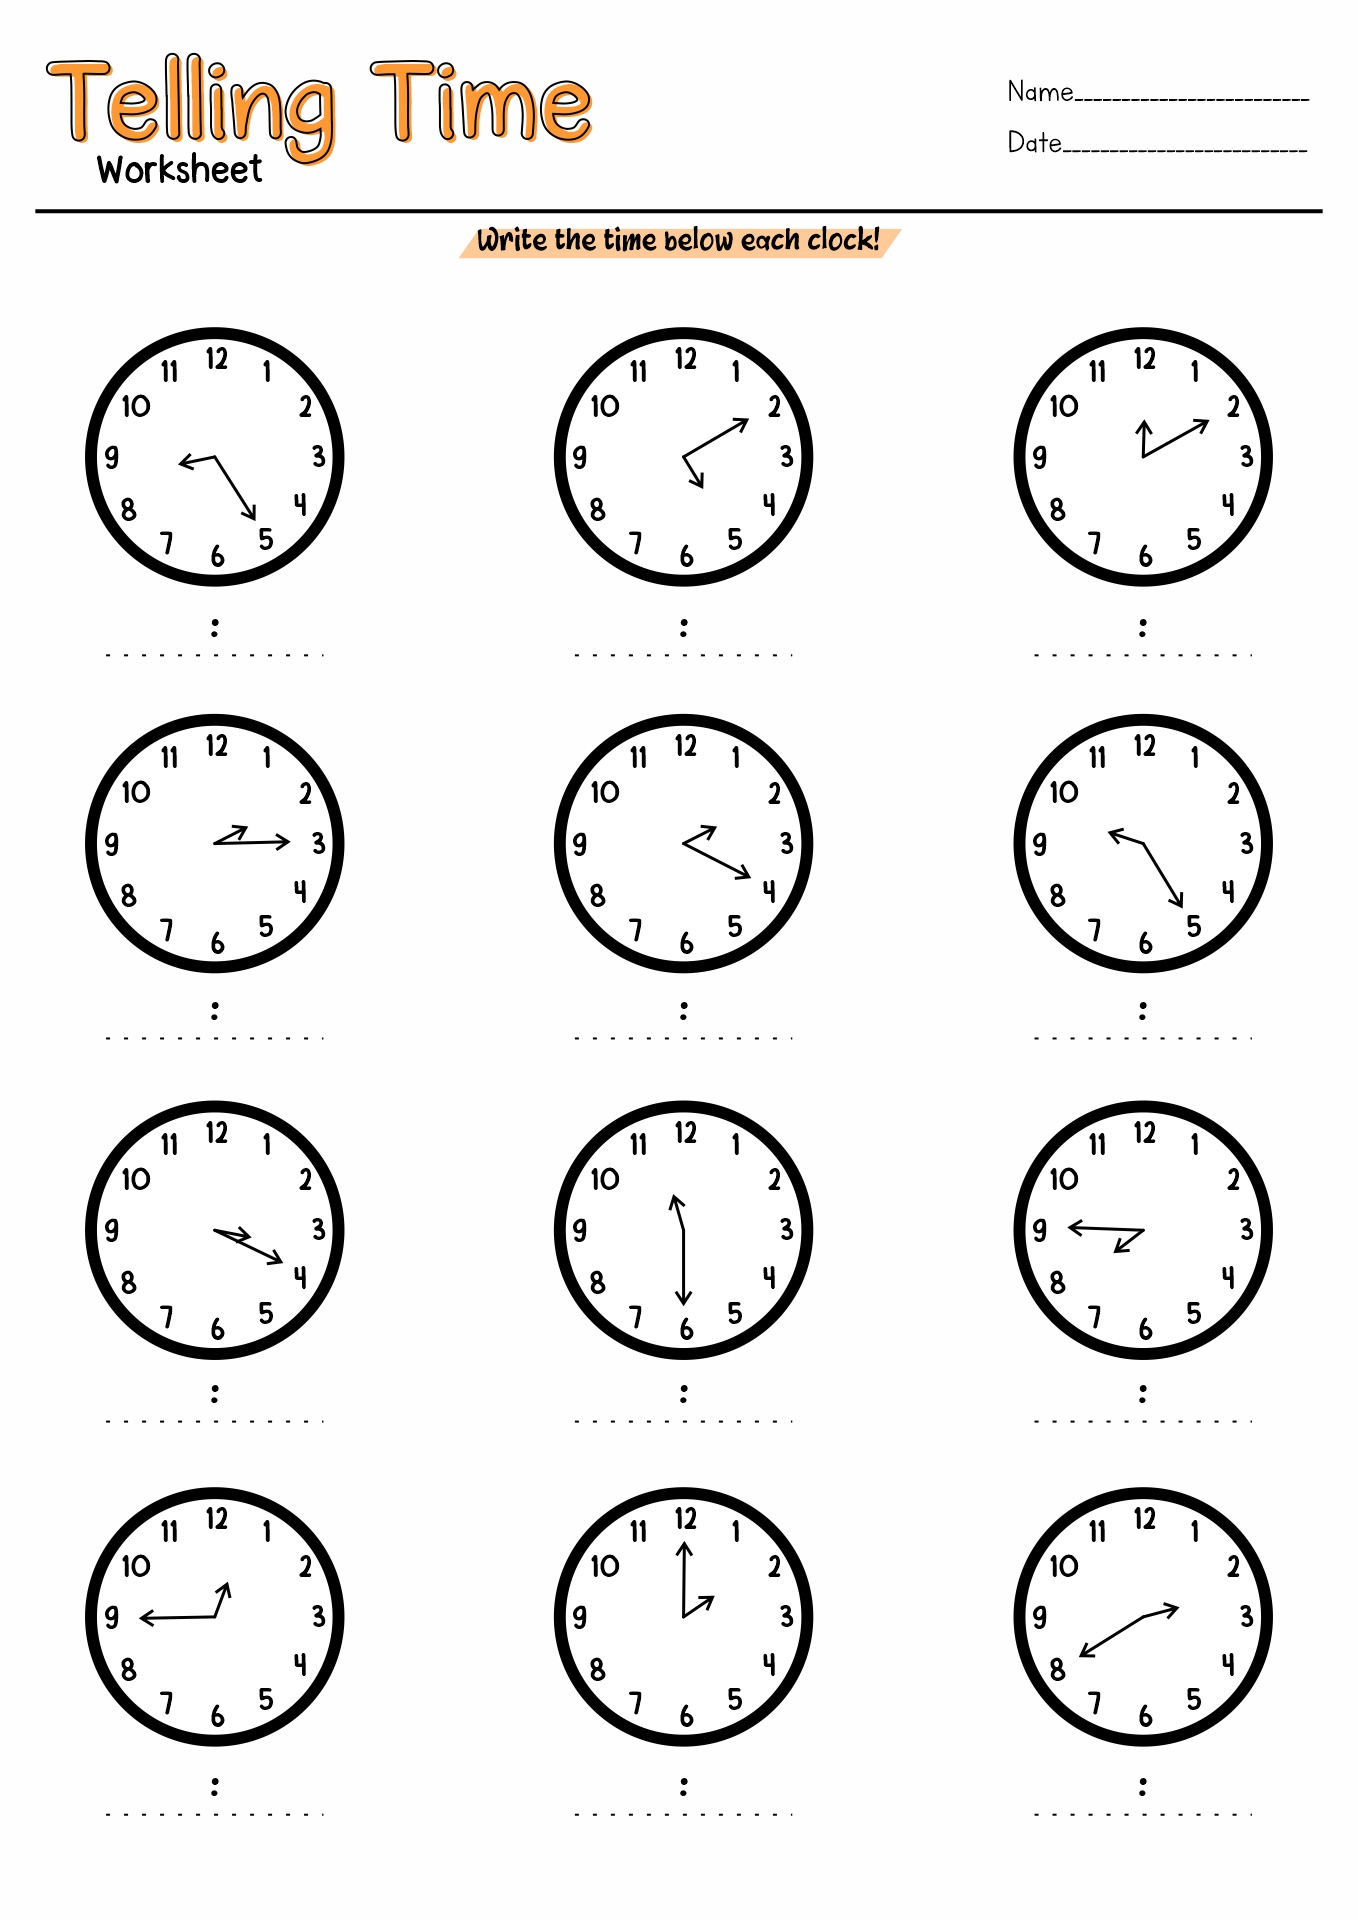 Free Printable Time Worksheets 3rd Grade Image